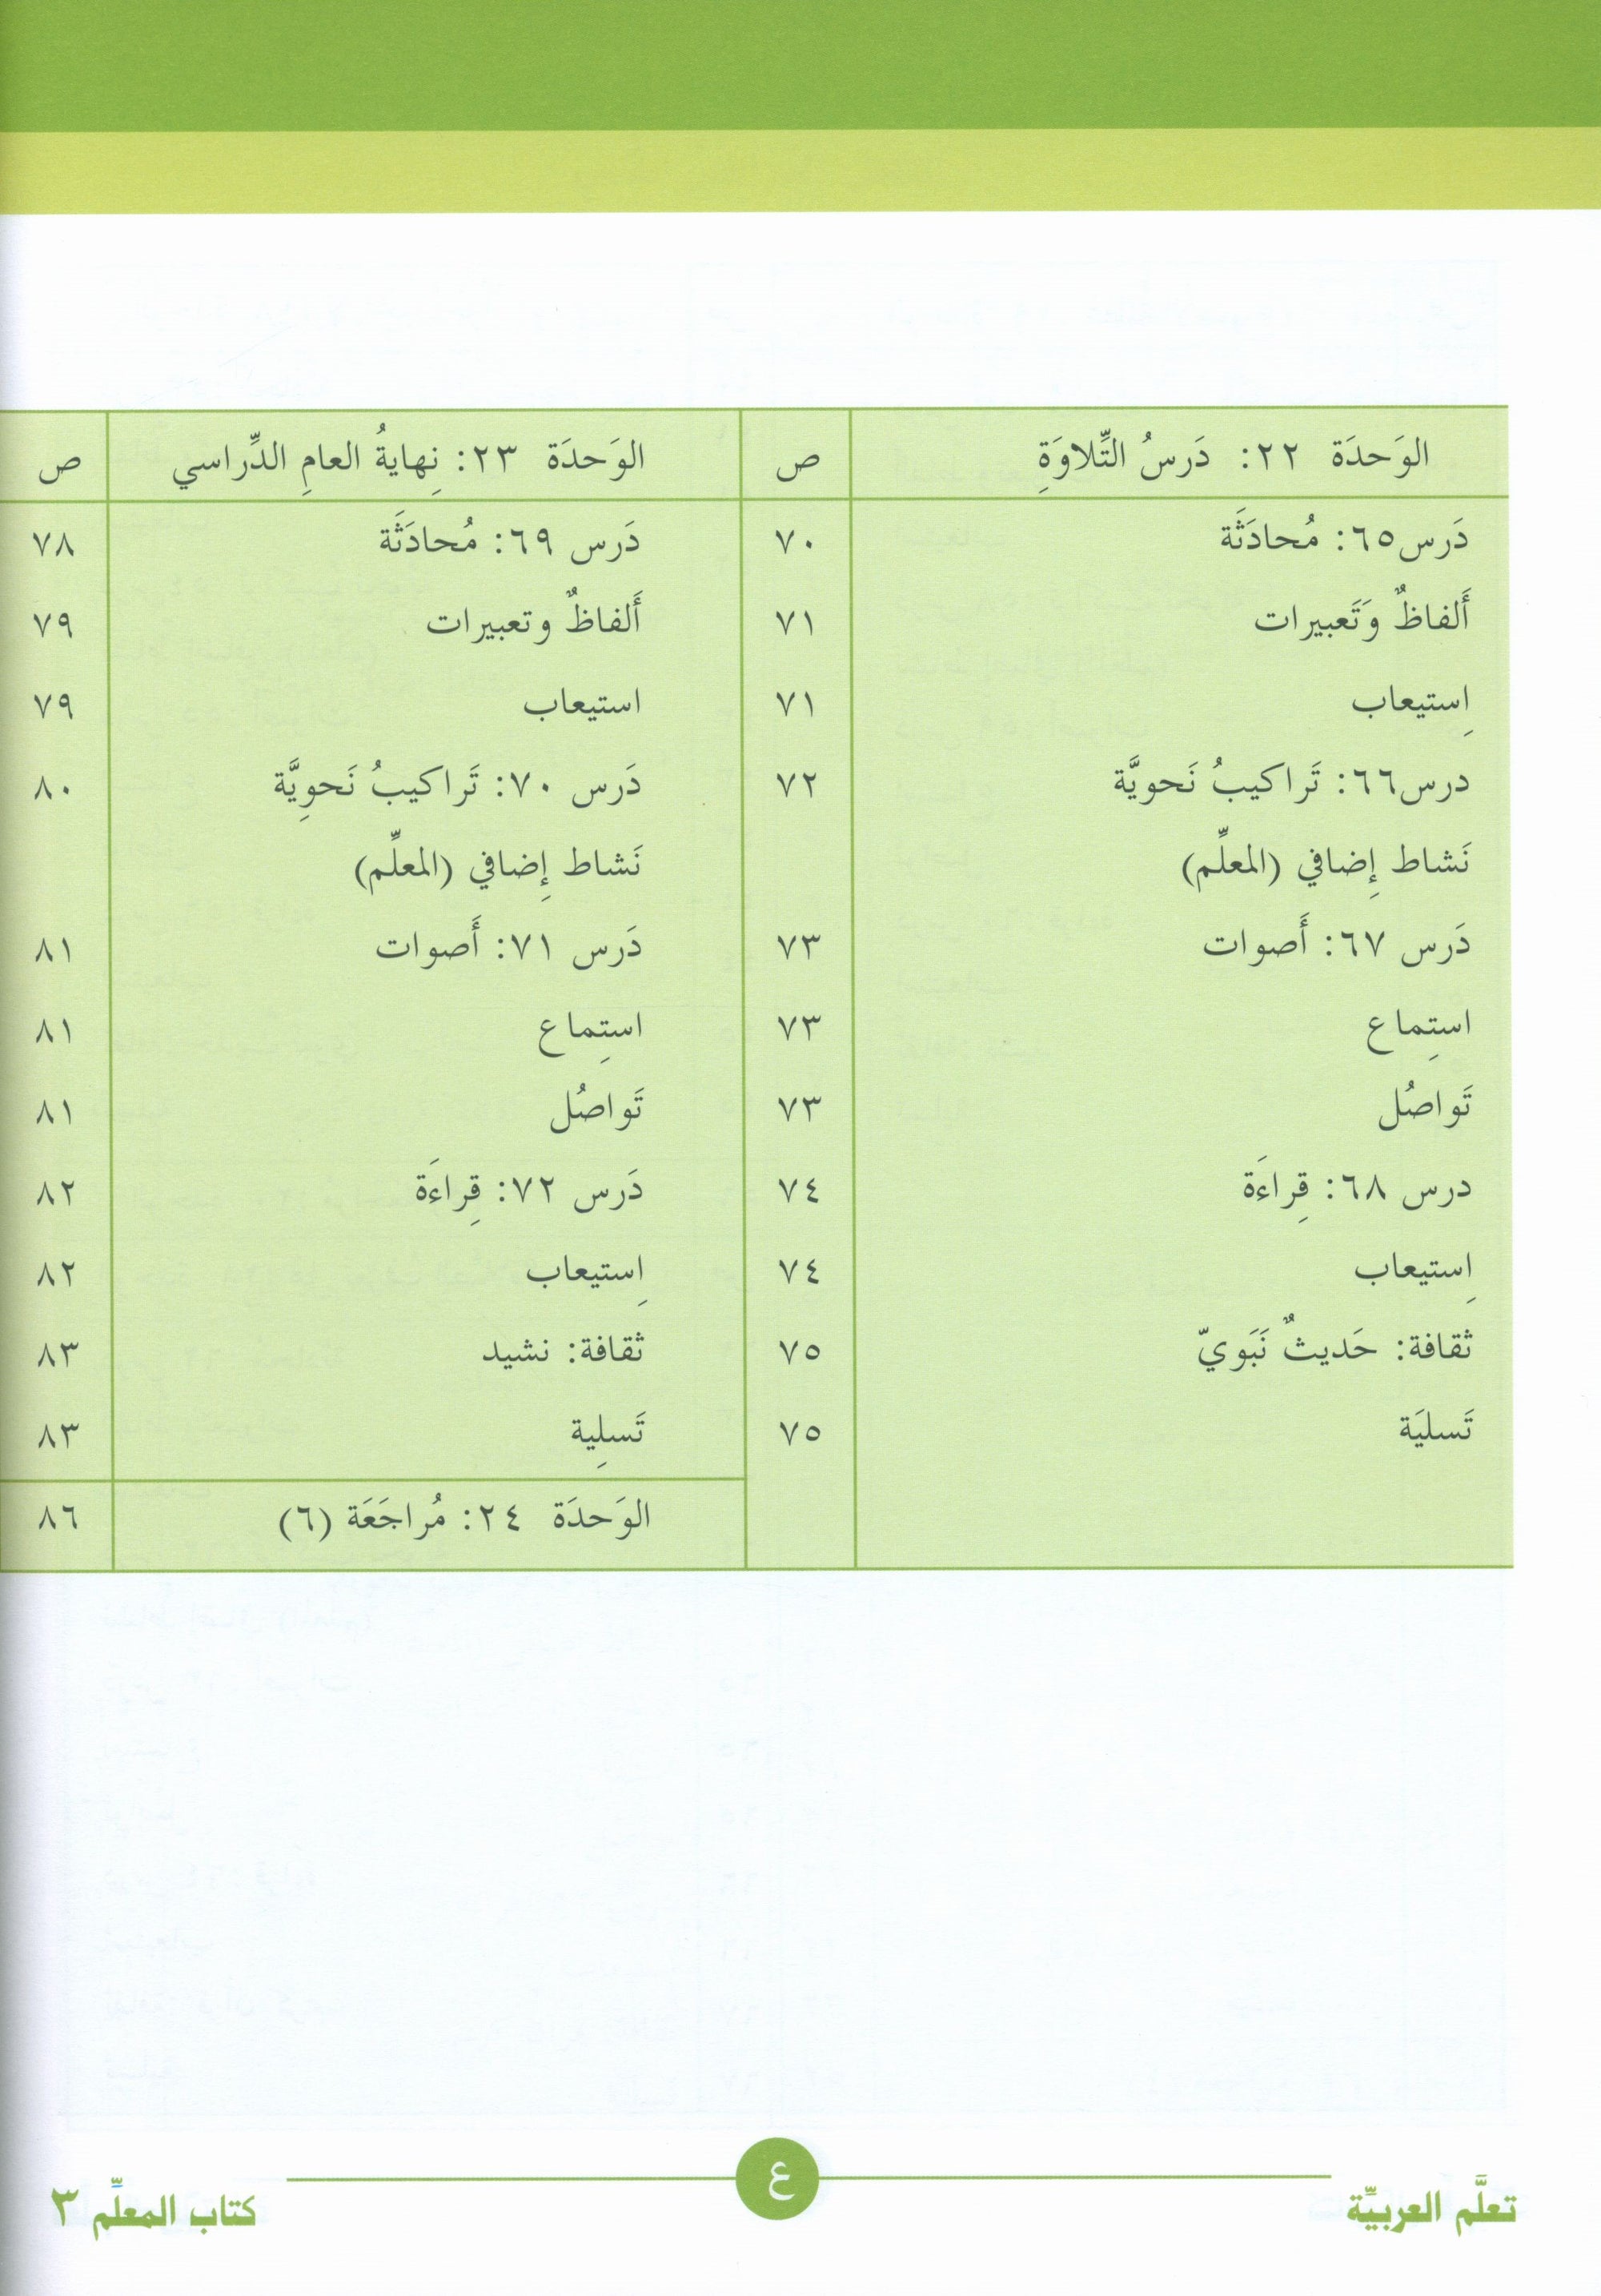 ICO Learn Arabic Teacher Book Level 3 Part 2 تعلم العربية كتاب المعلم